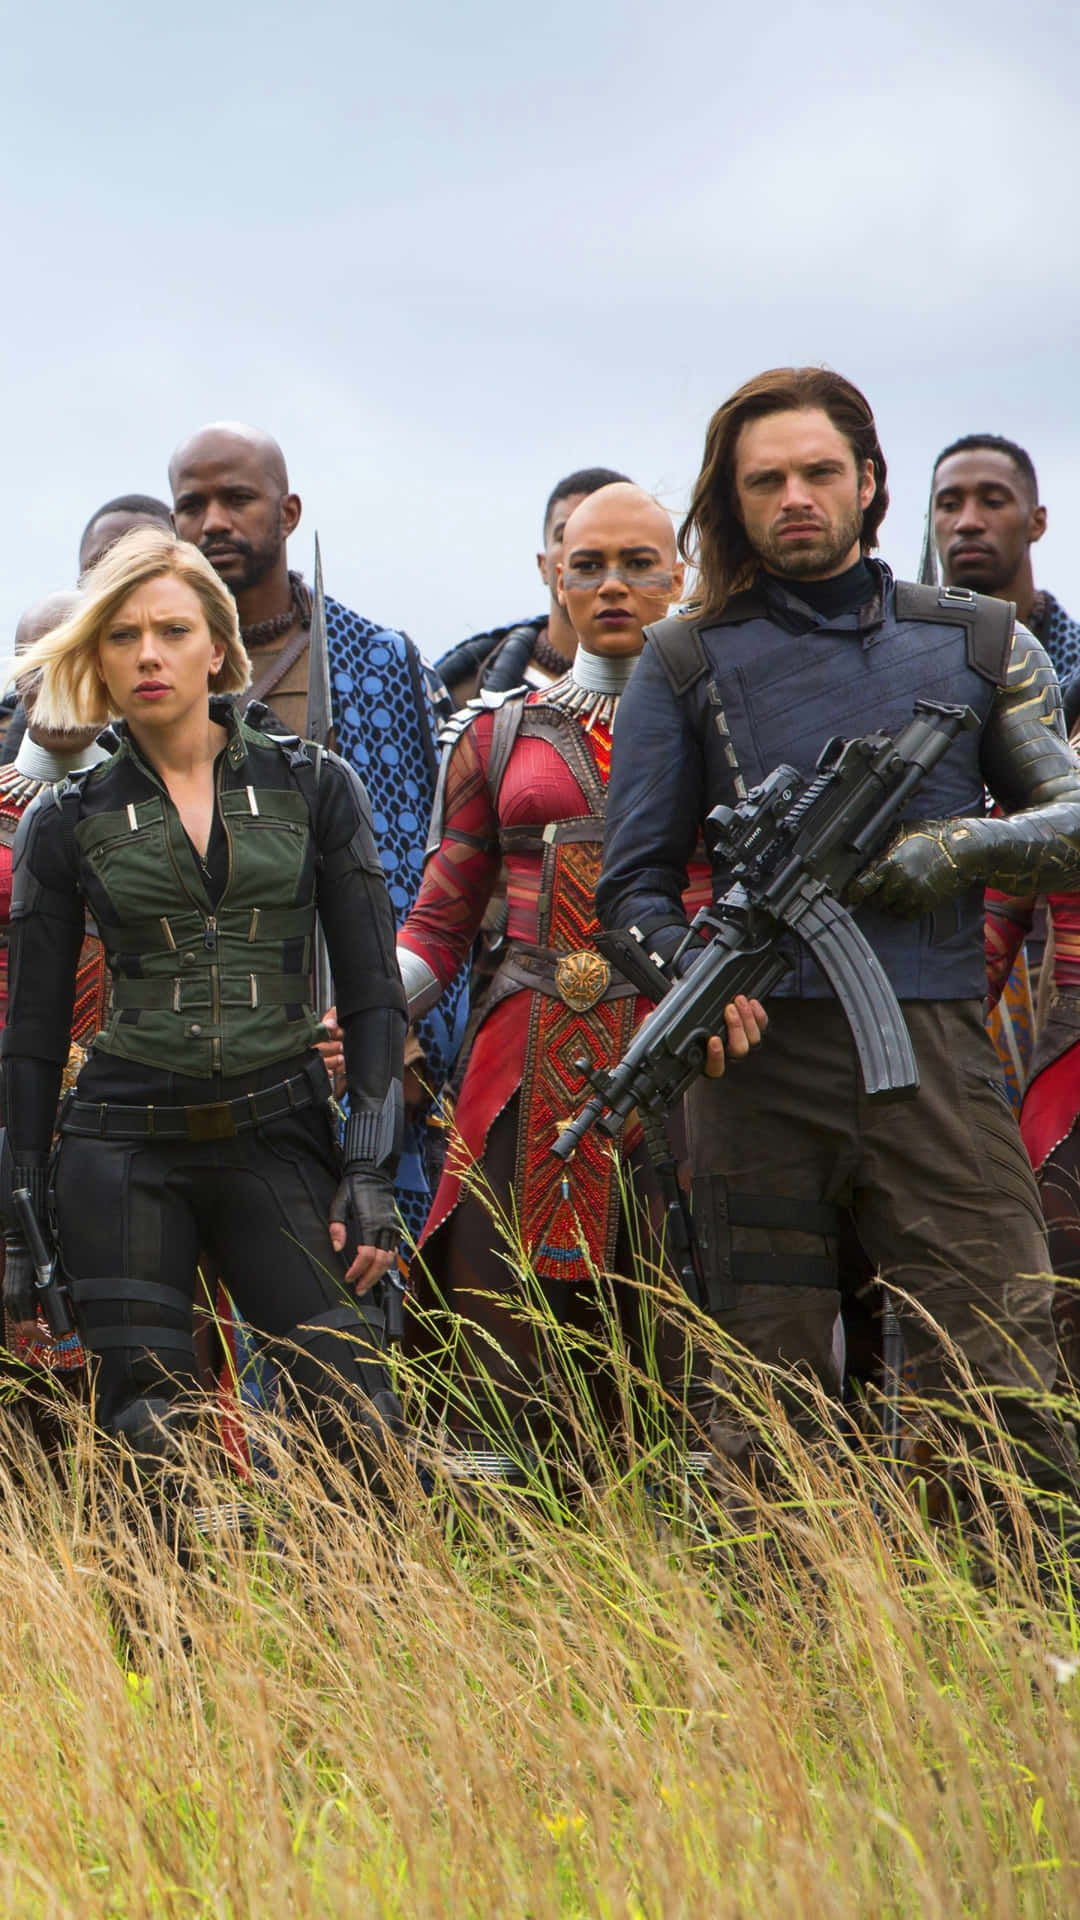 De Avengers slutter sig sammen i et episk slag mod Thanos. Wallpaper